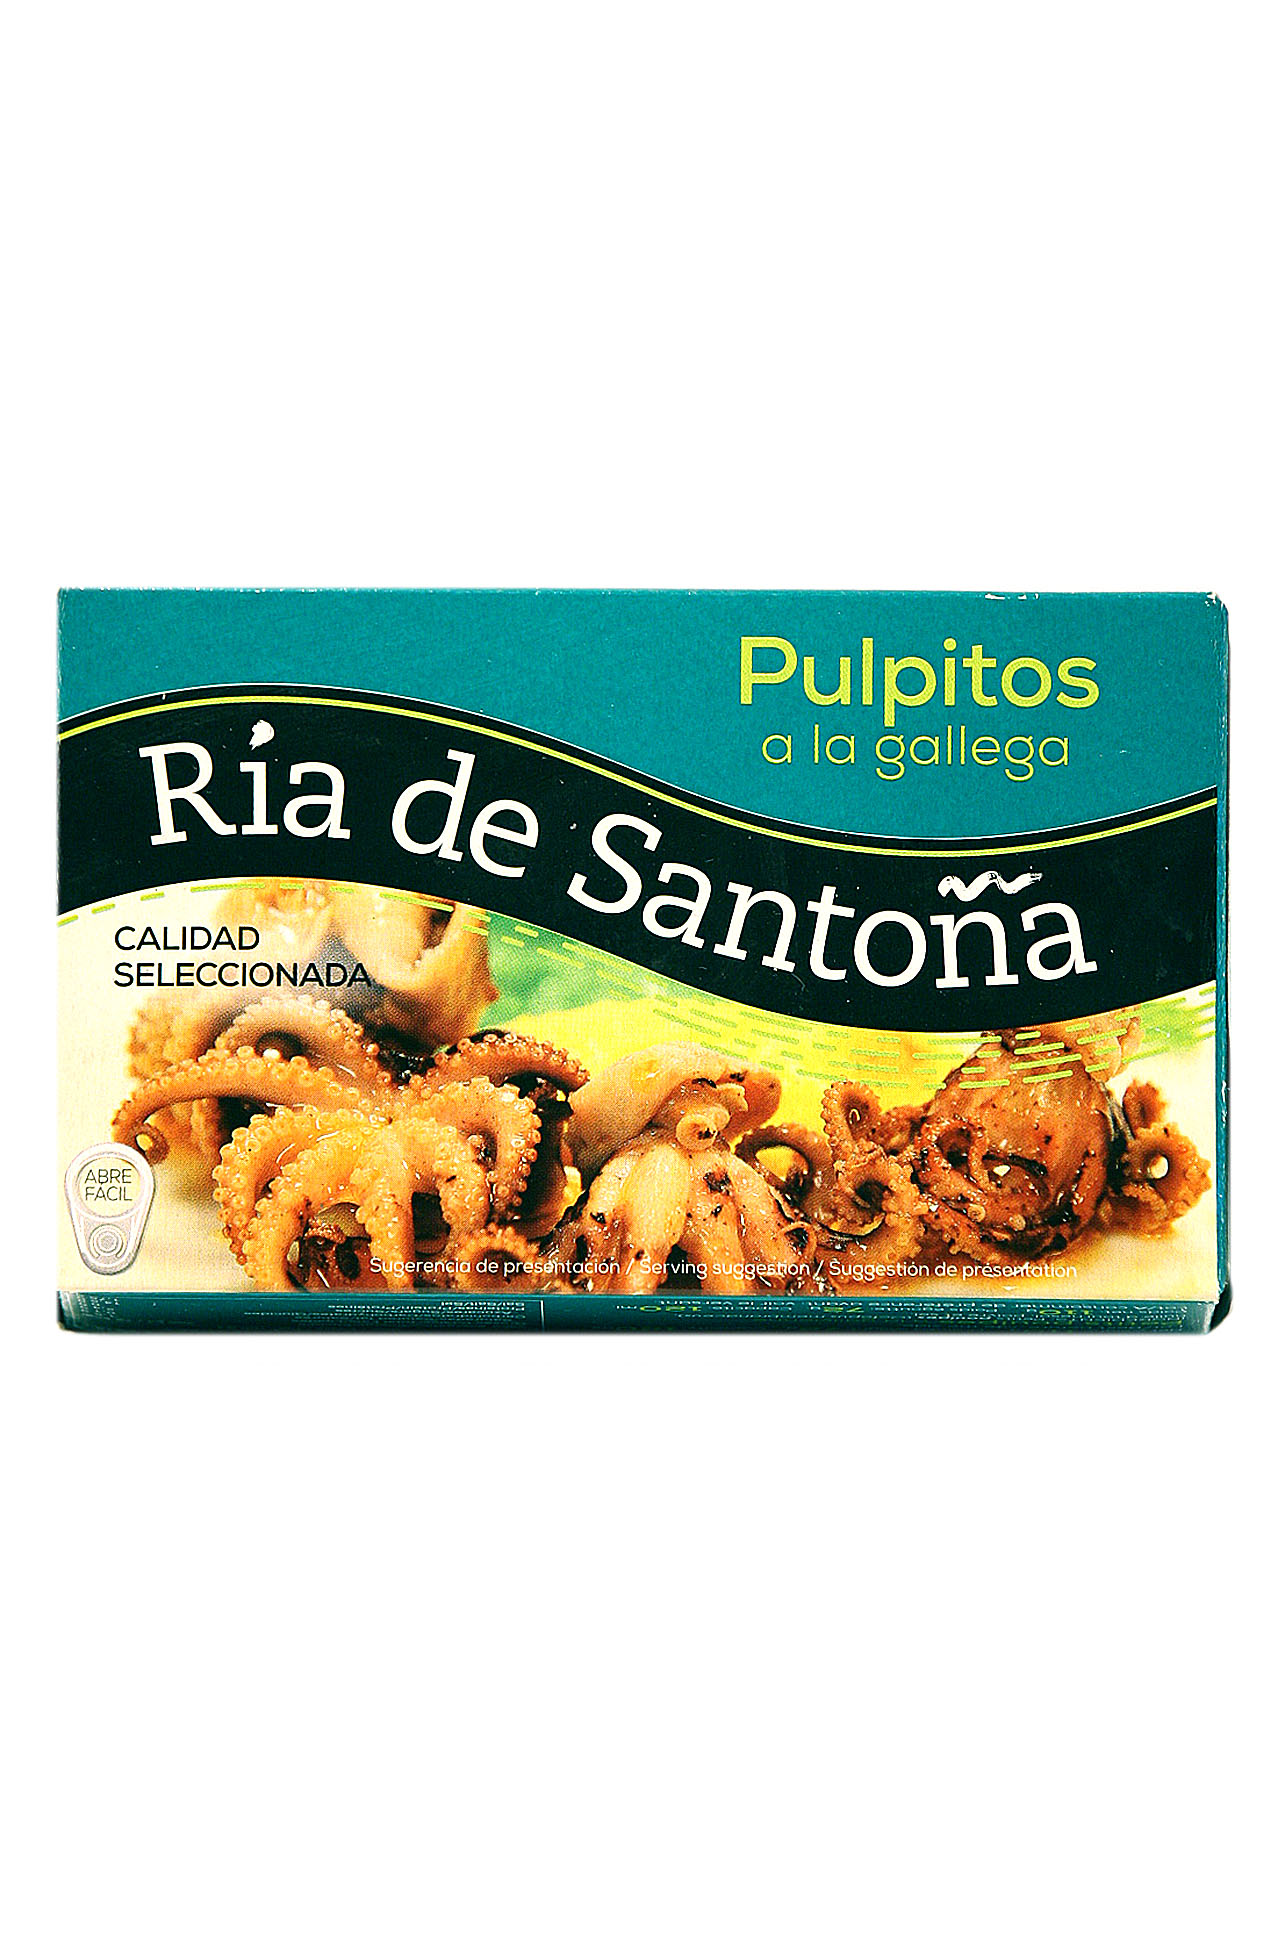 Galician octopus